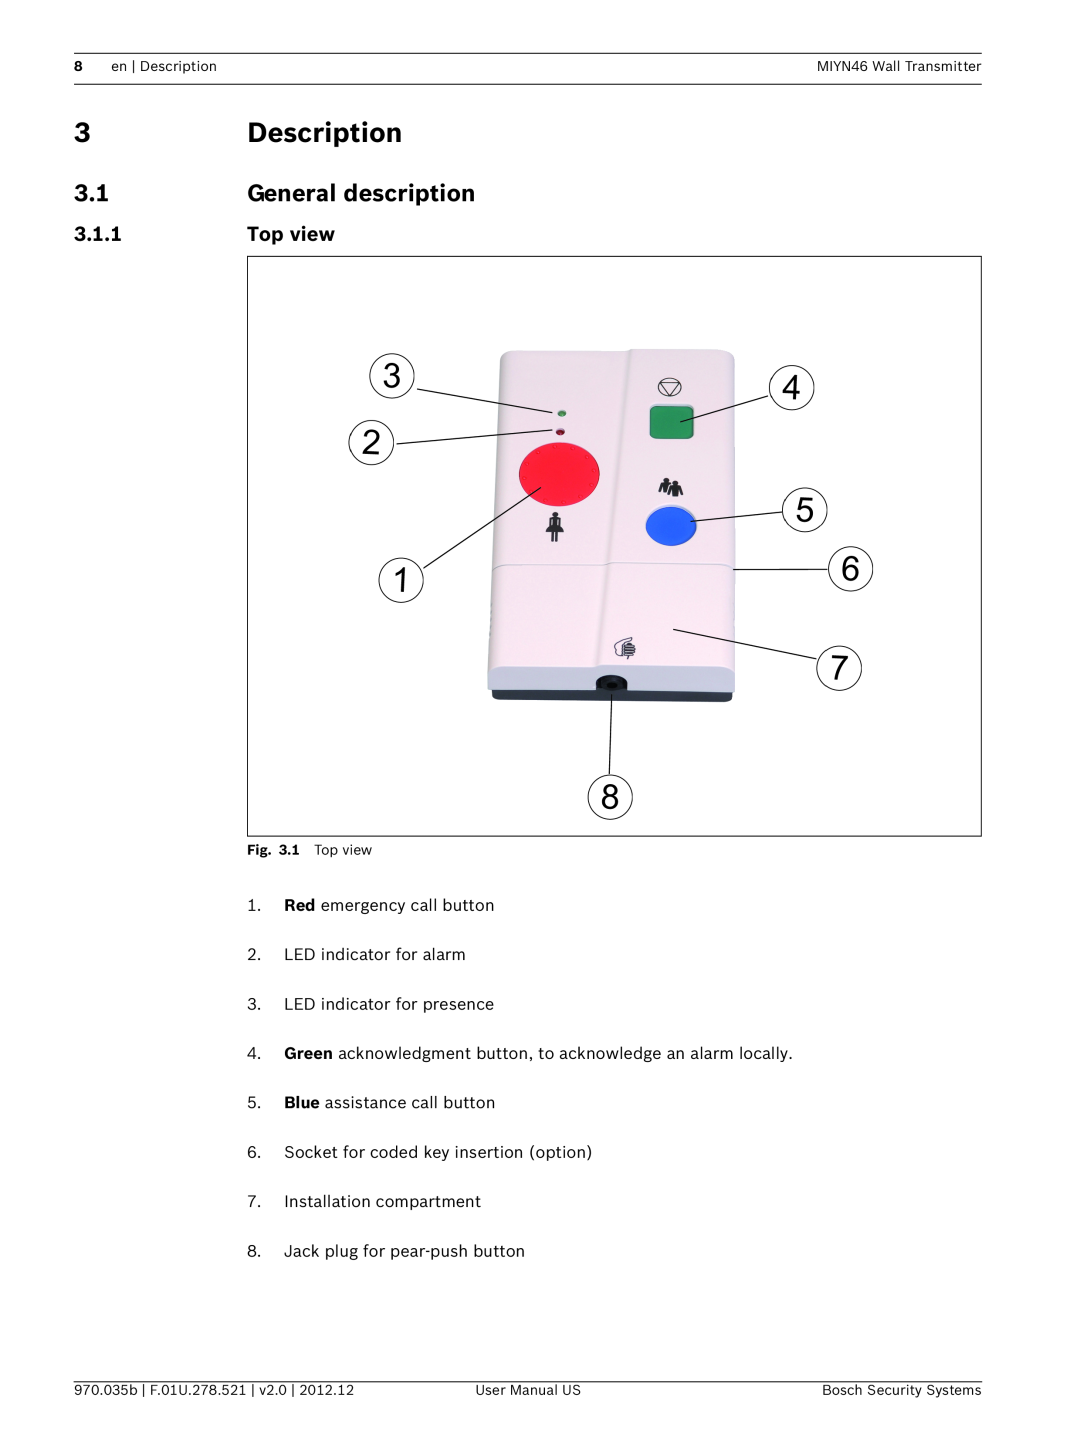 Bosch Appliances MIYN46 user manual Description, General description, 3.1.1, Top view 